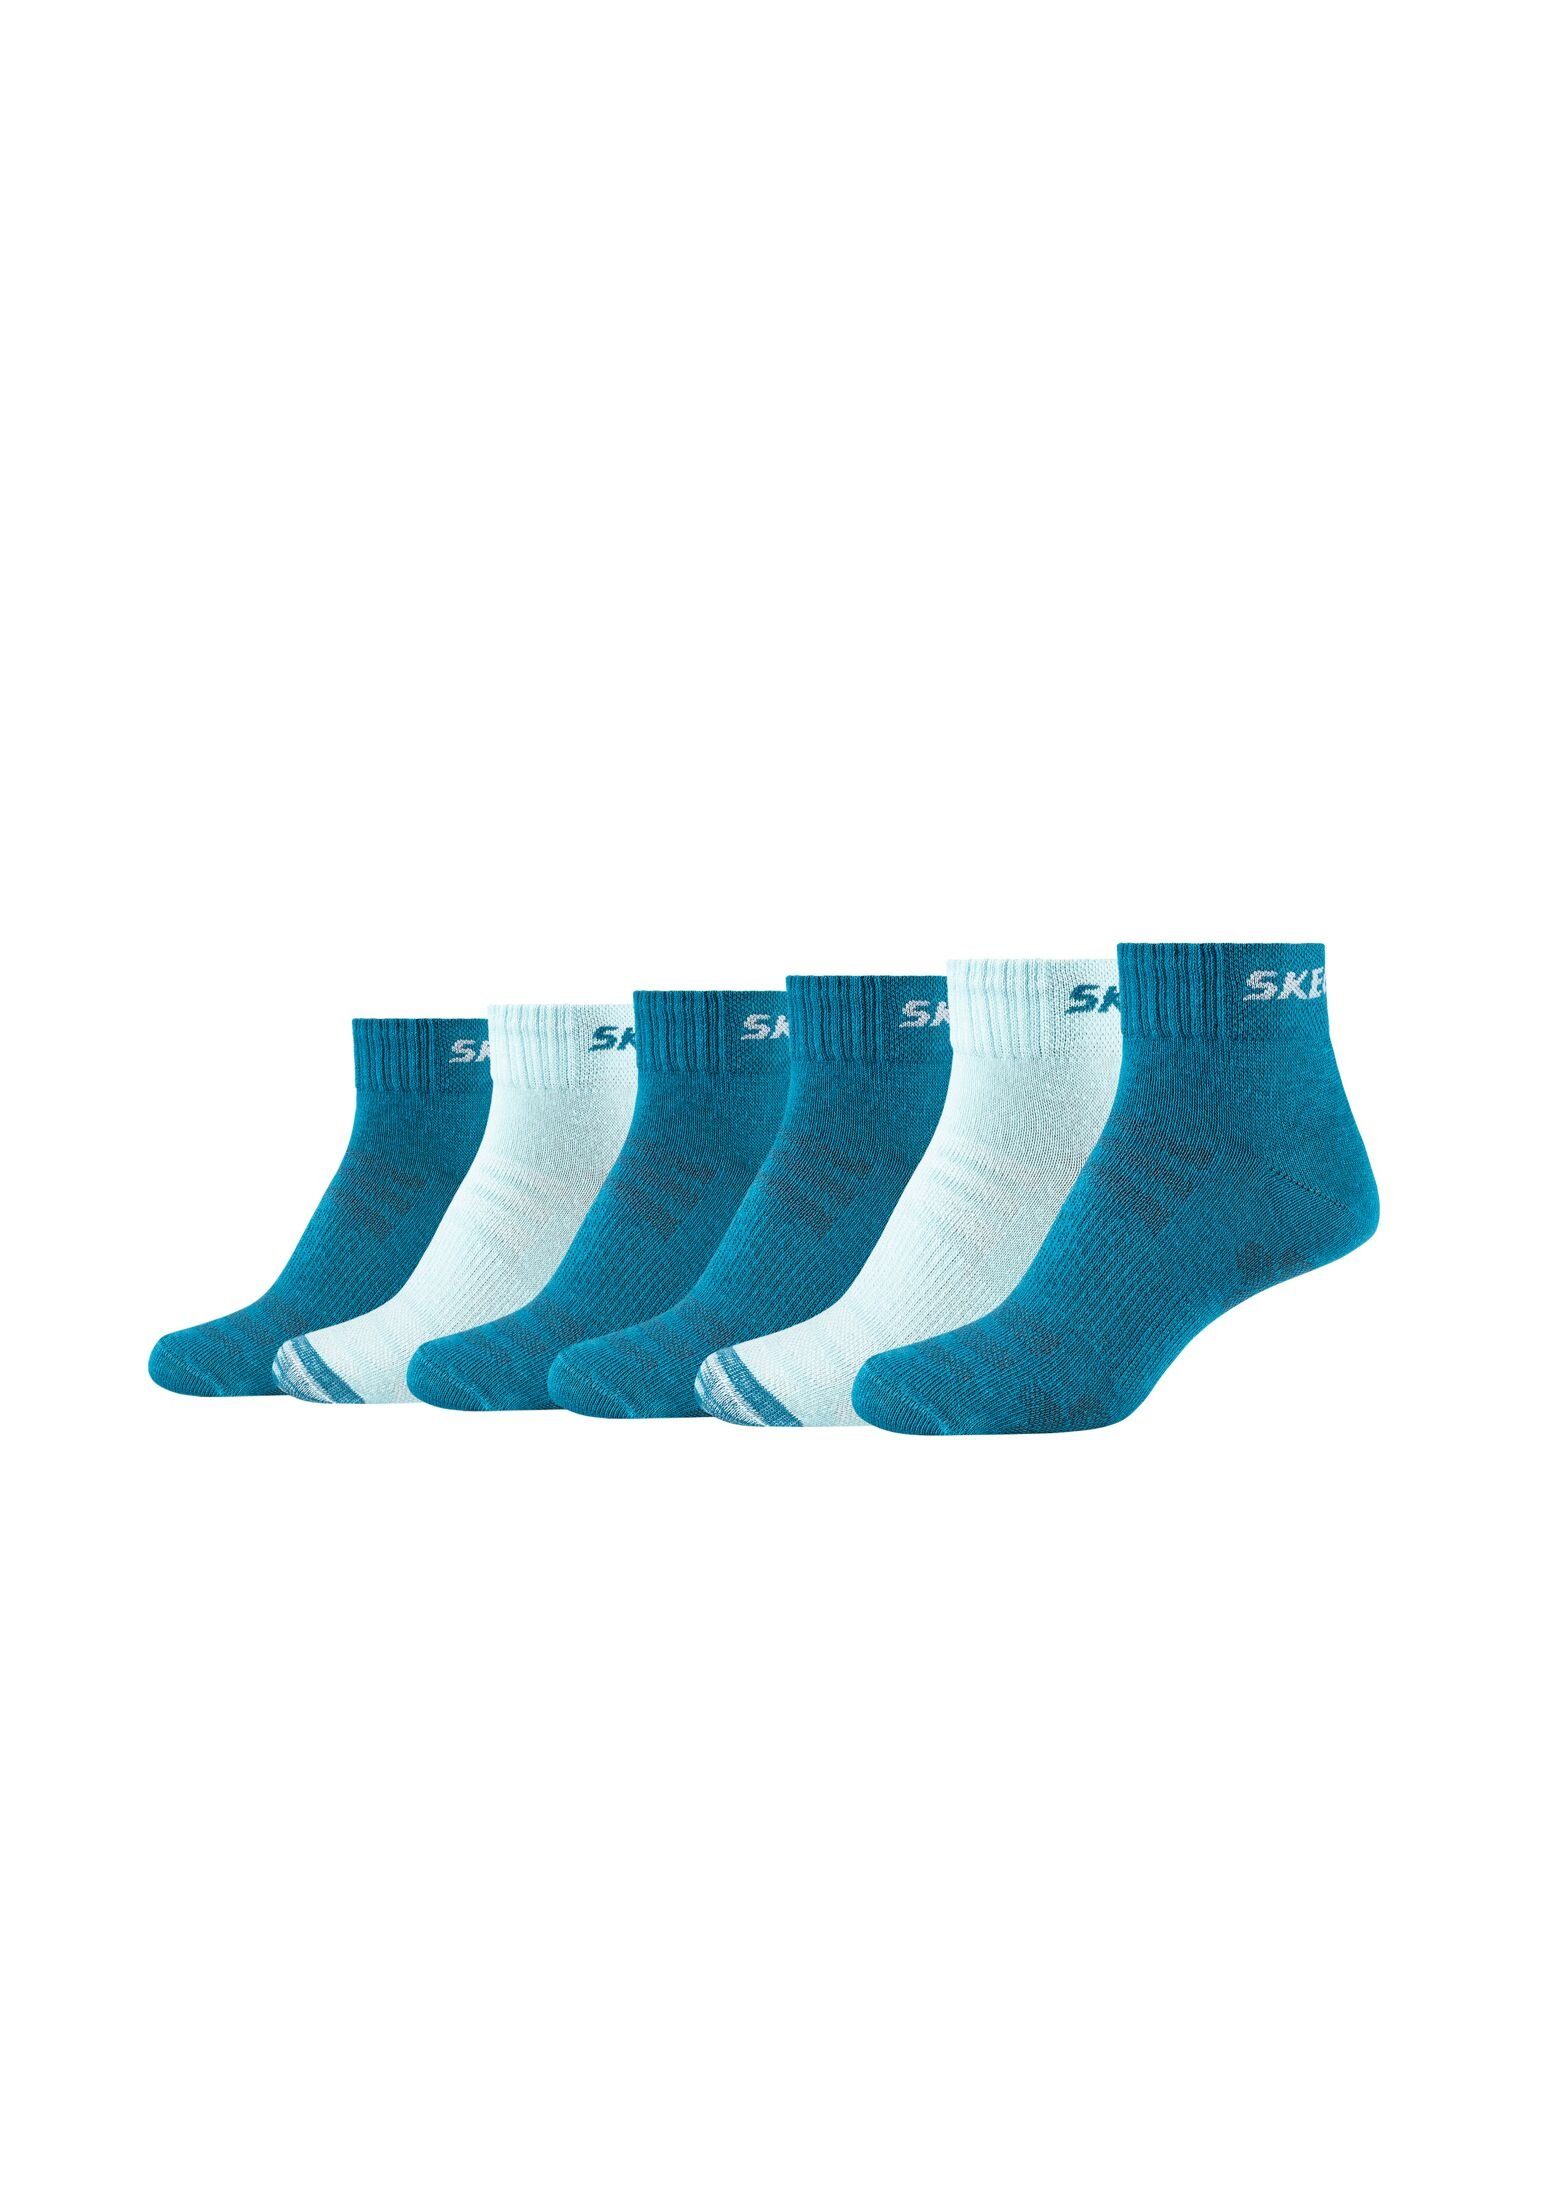 Skechers Kurzsocken Kurzsocken 6er Pack, Socken im praktischen 6er-Pack mit  Komfort-Bündchen